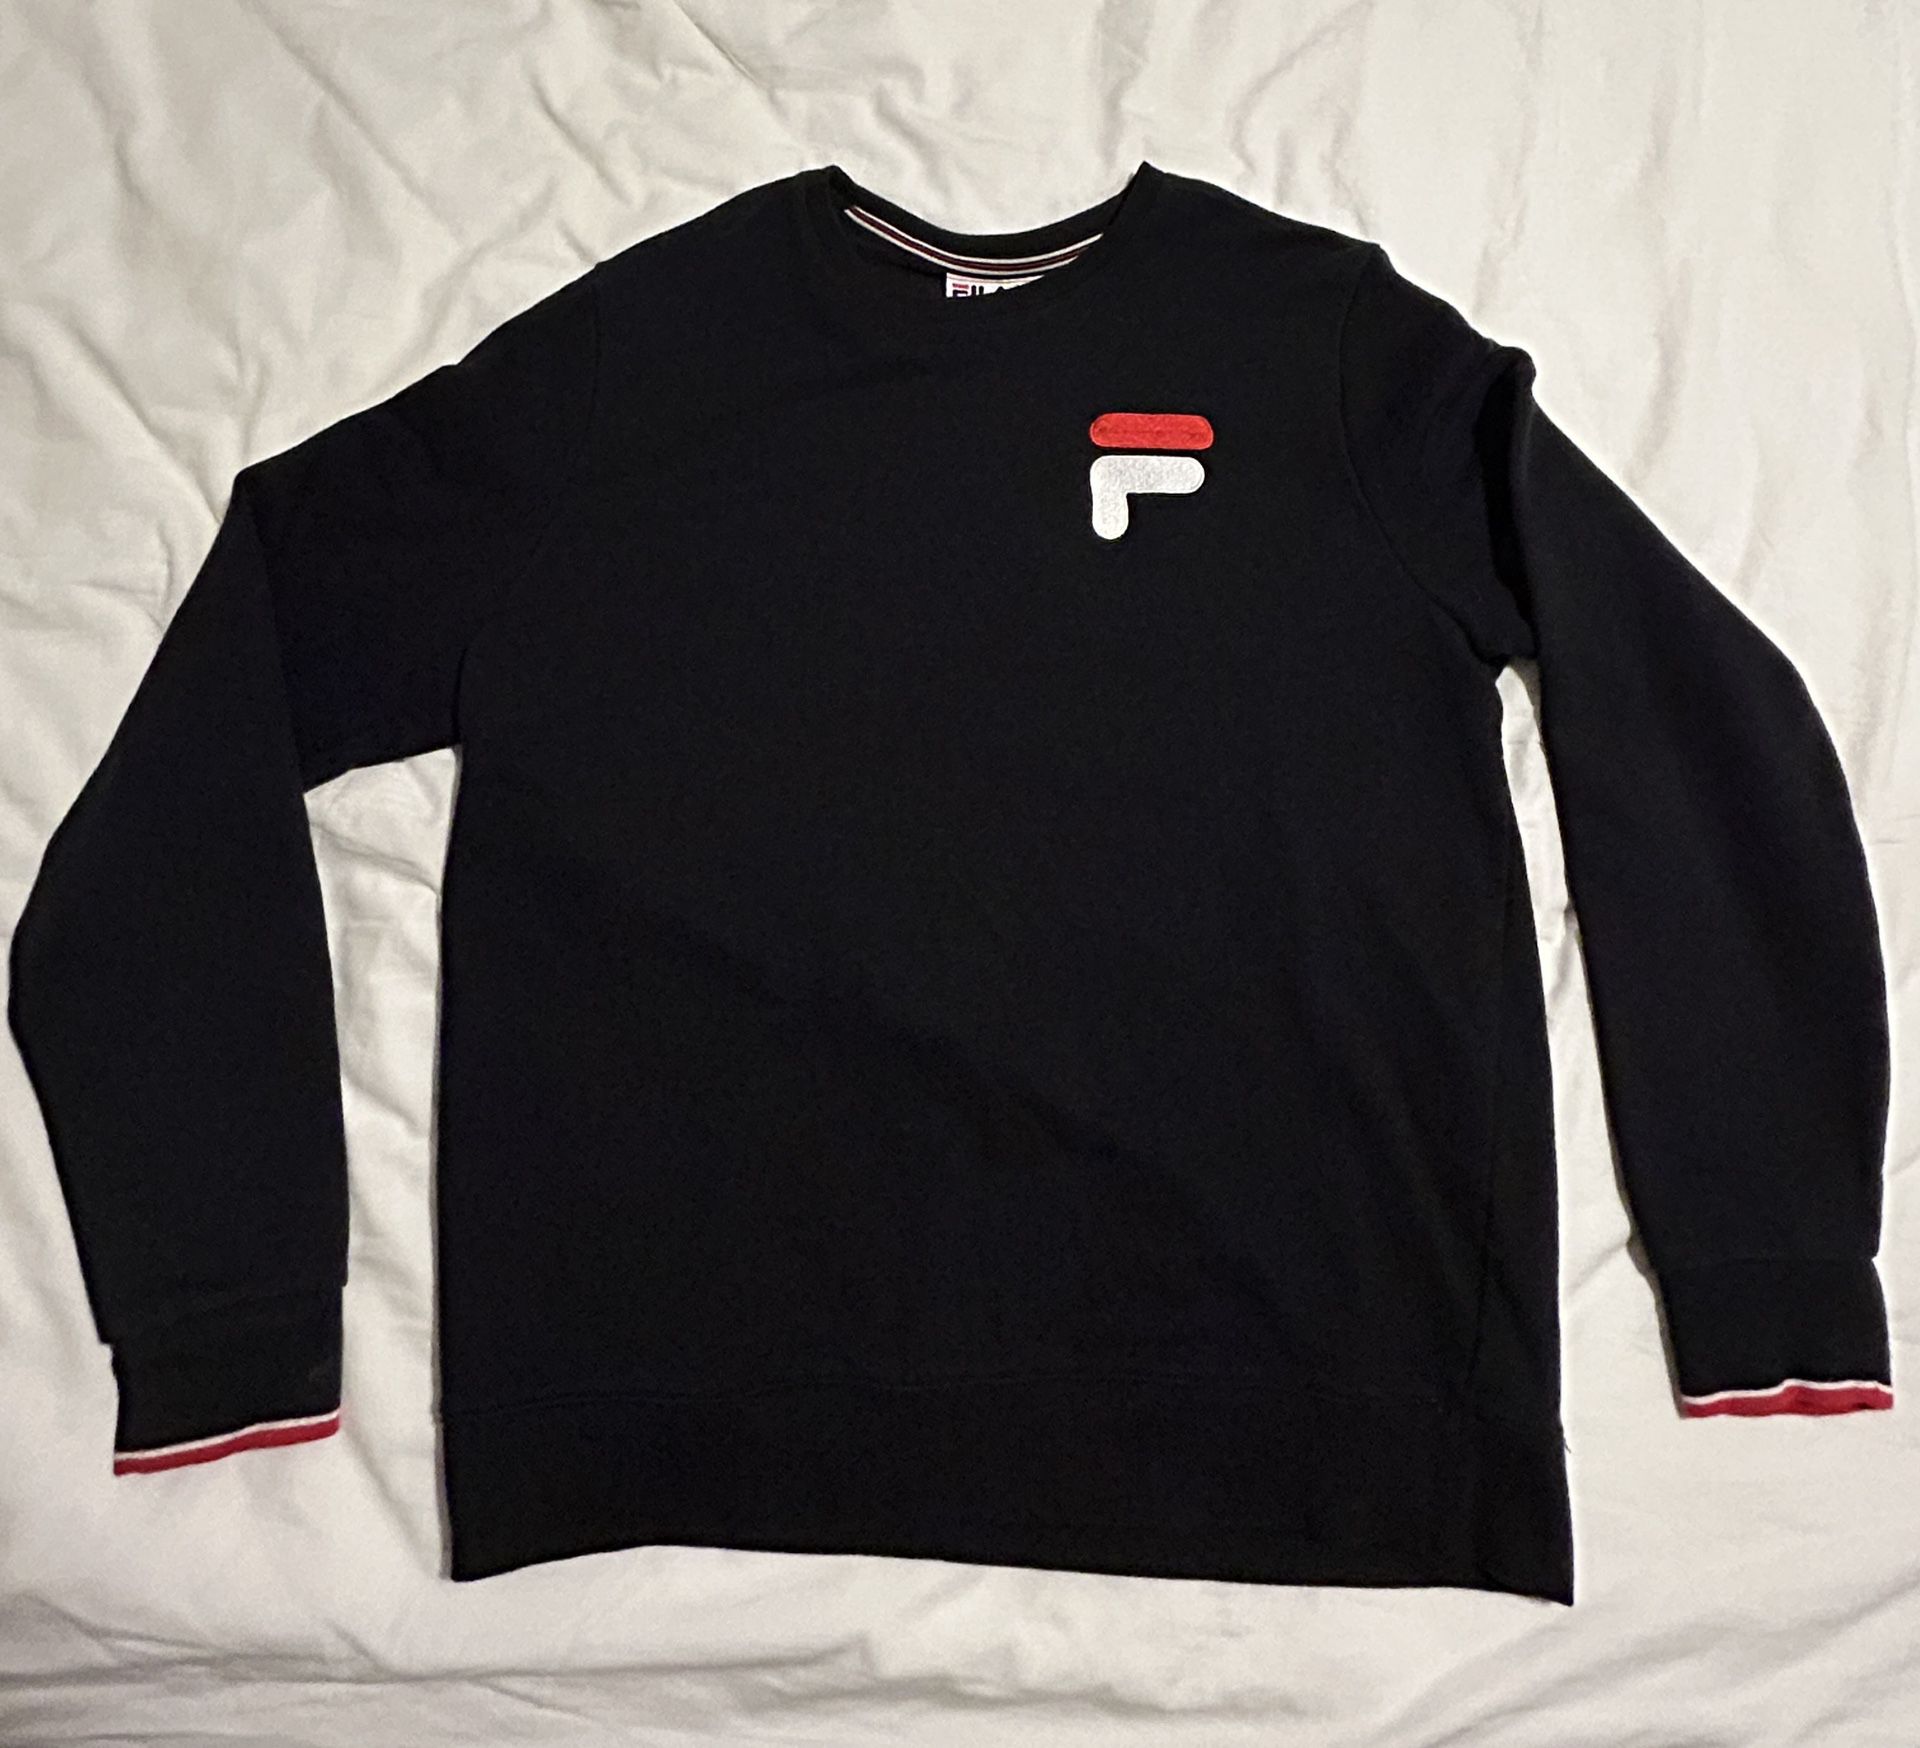 Retro Fila embroidered logo pullover mens streetwear black sweatshirt size Large 